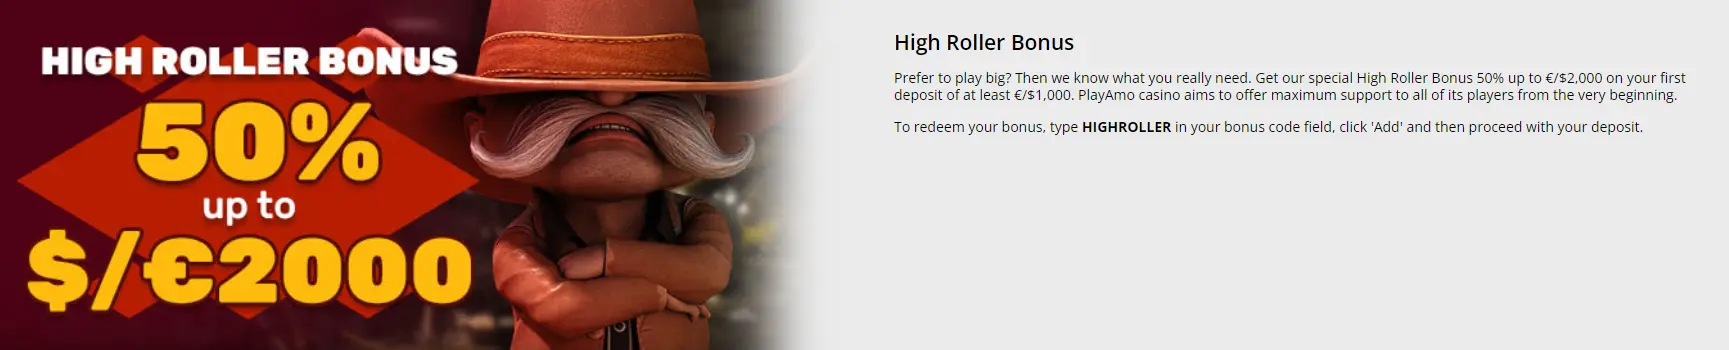 Playamo high roller bonus